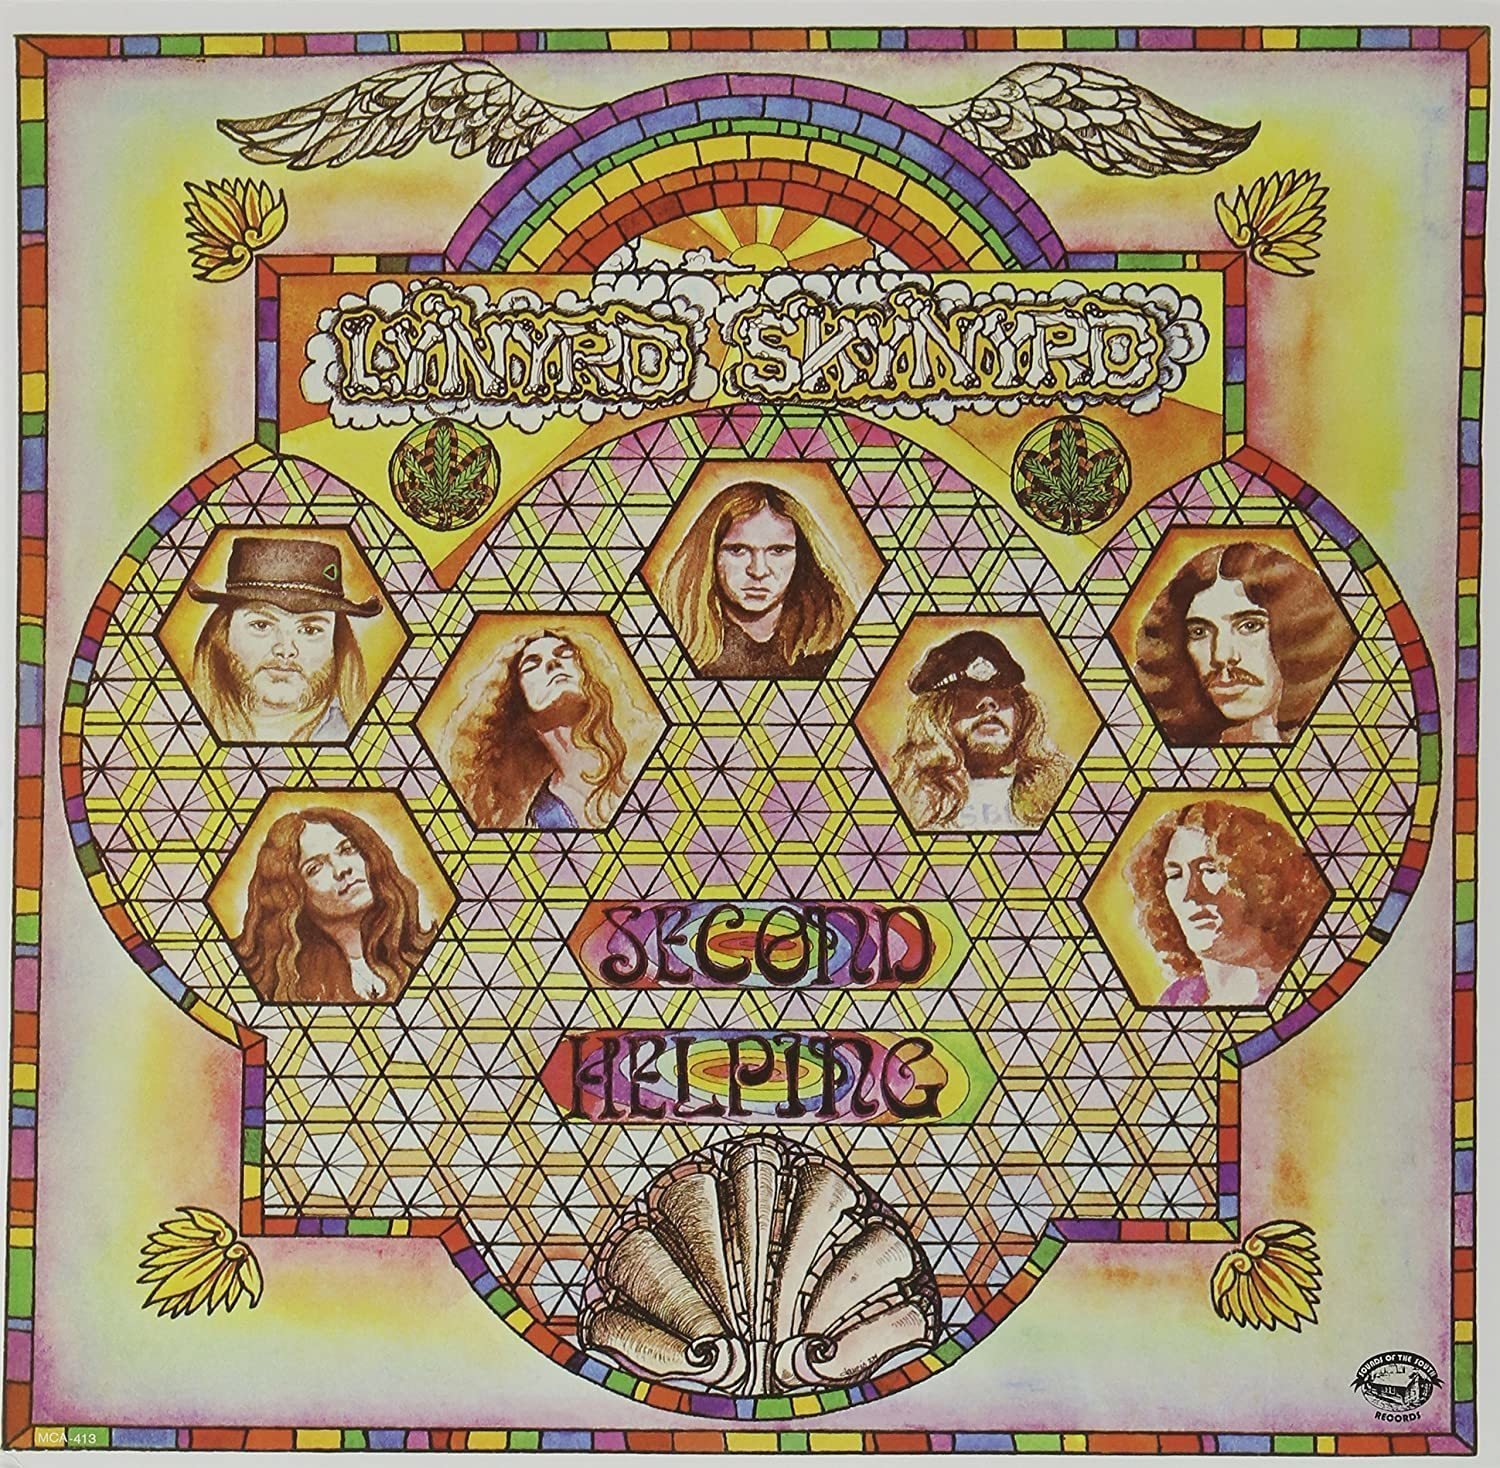 Disco de vinilo Lynyrd Skynyrd - Second Helping (200g (LP)